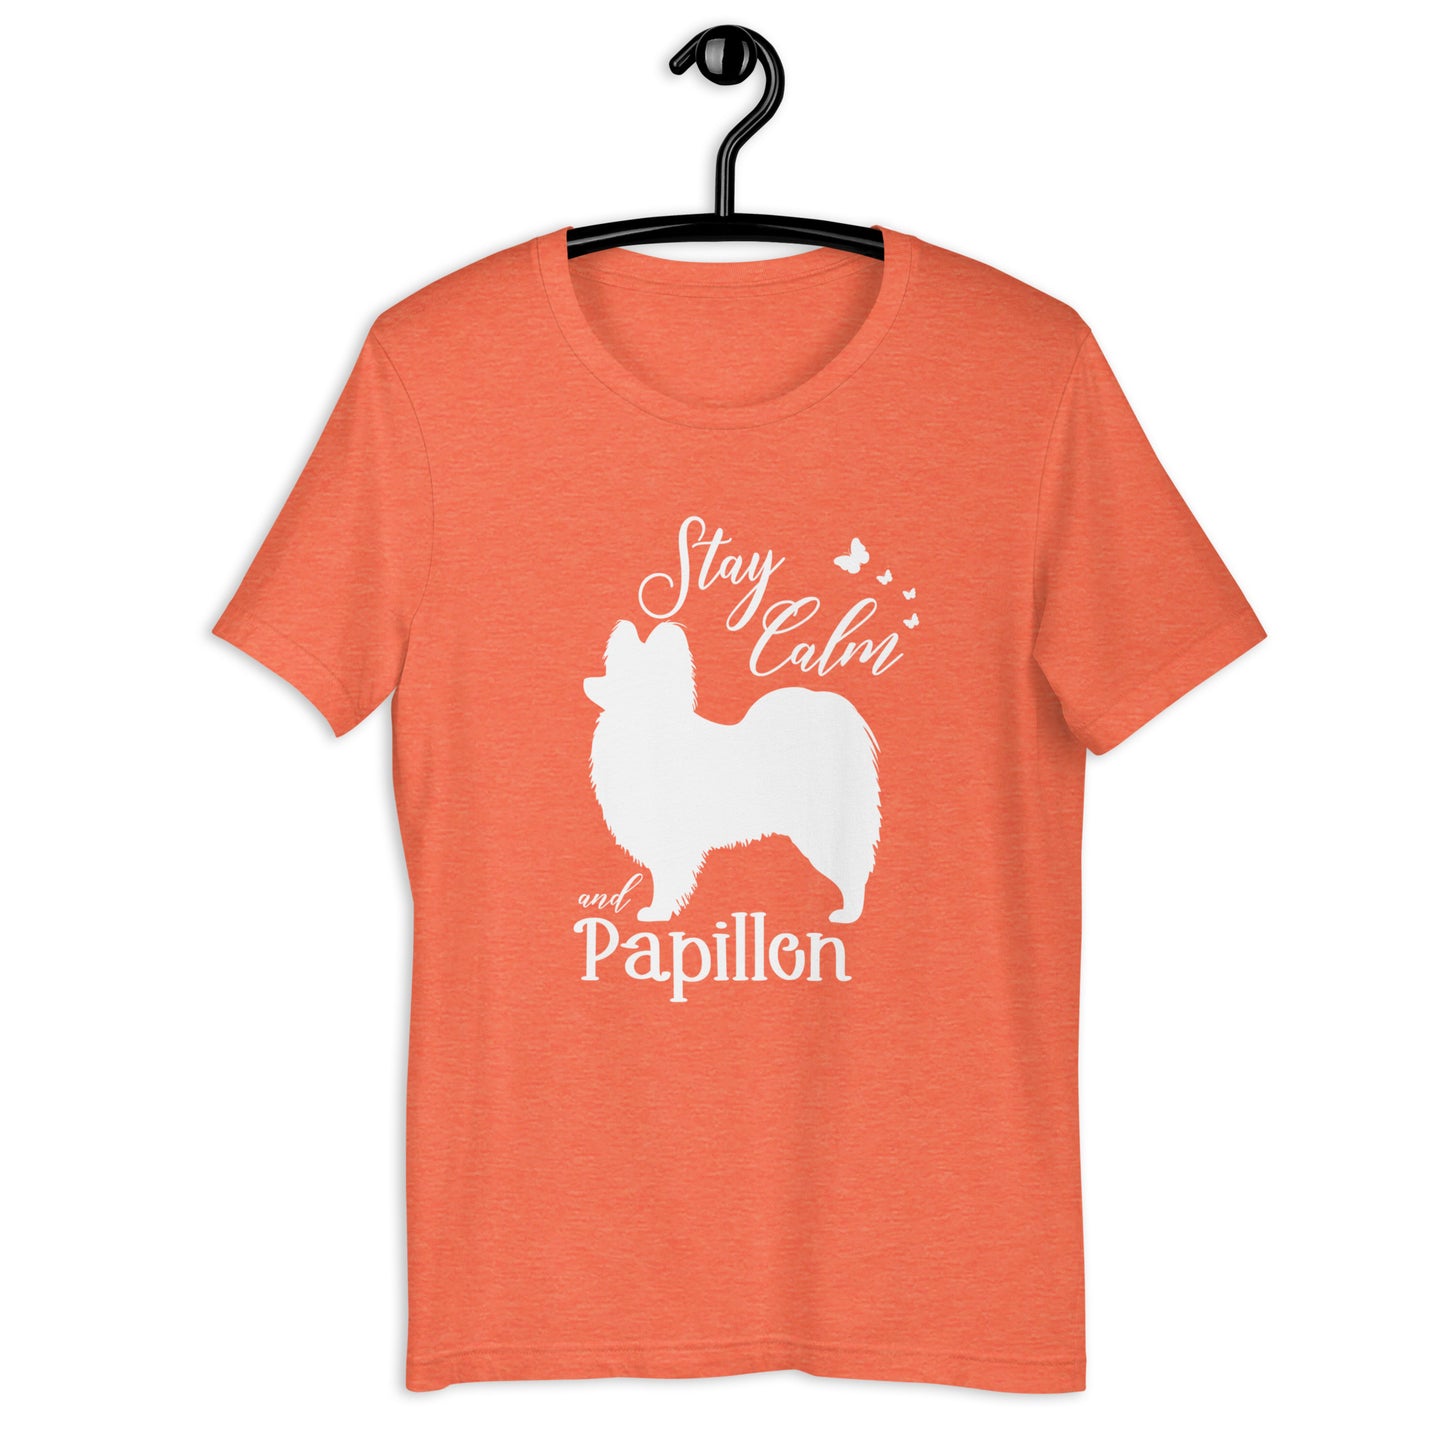 STAY CALM, & PAPILLON - Unisex t-shirt